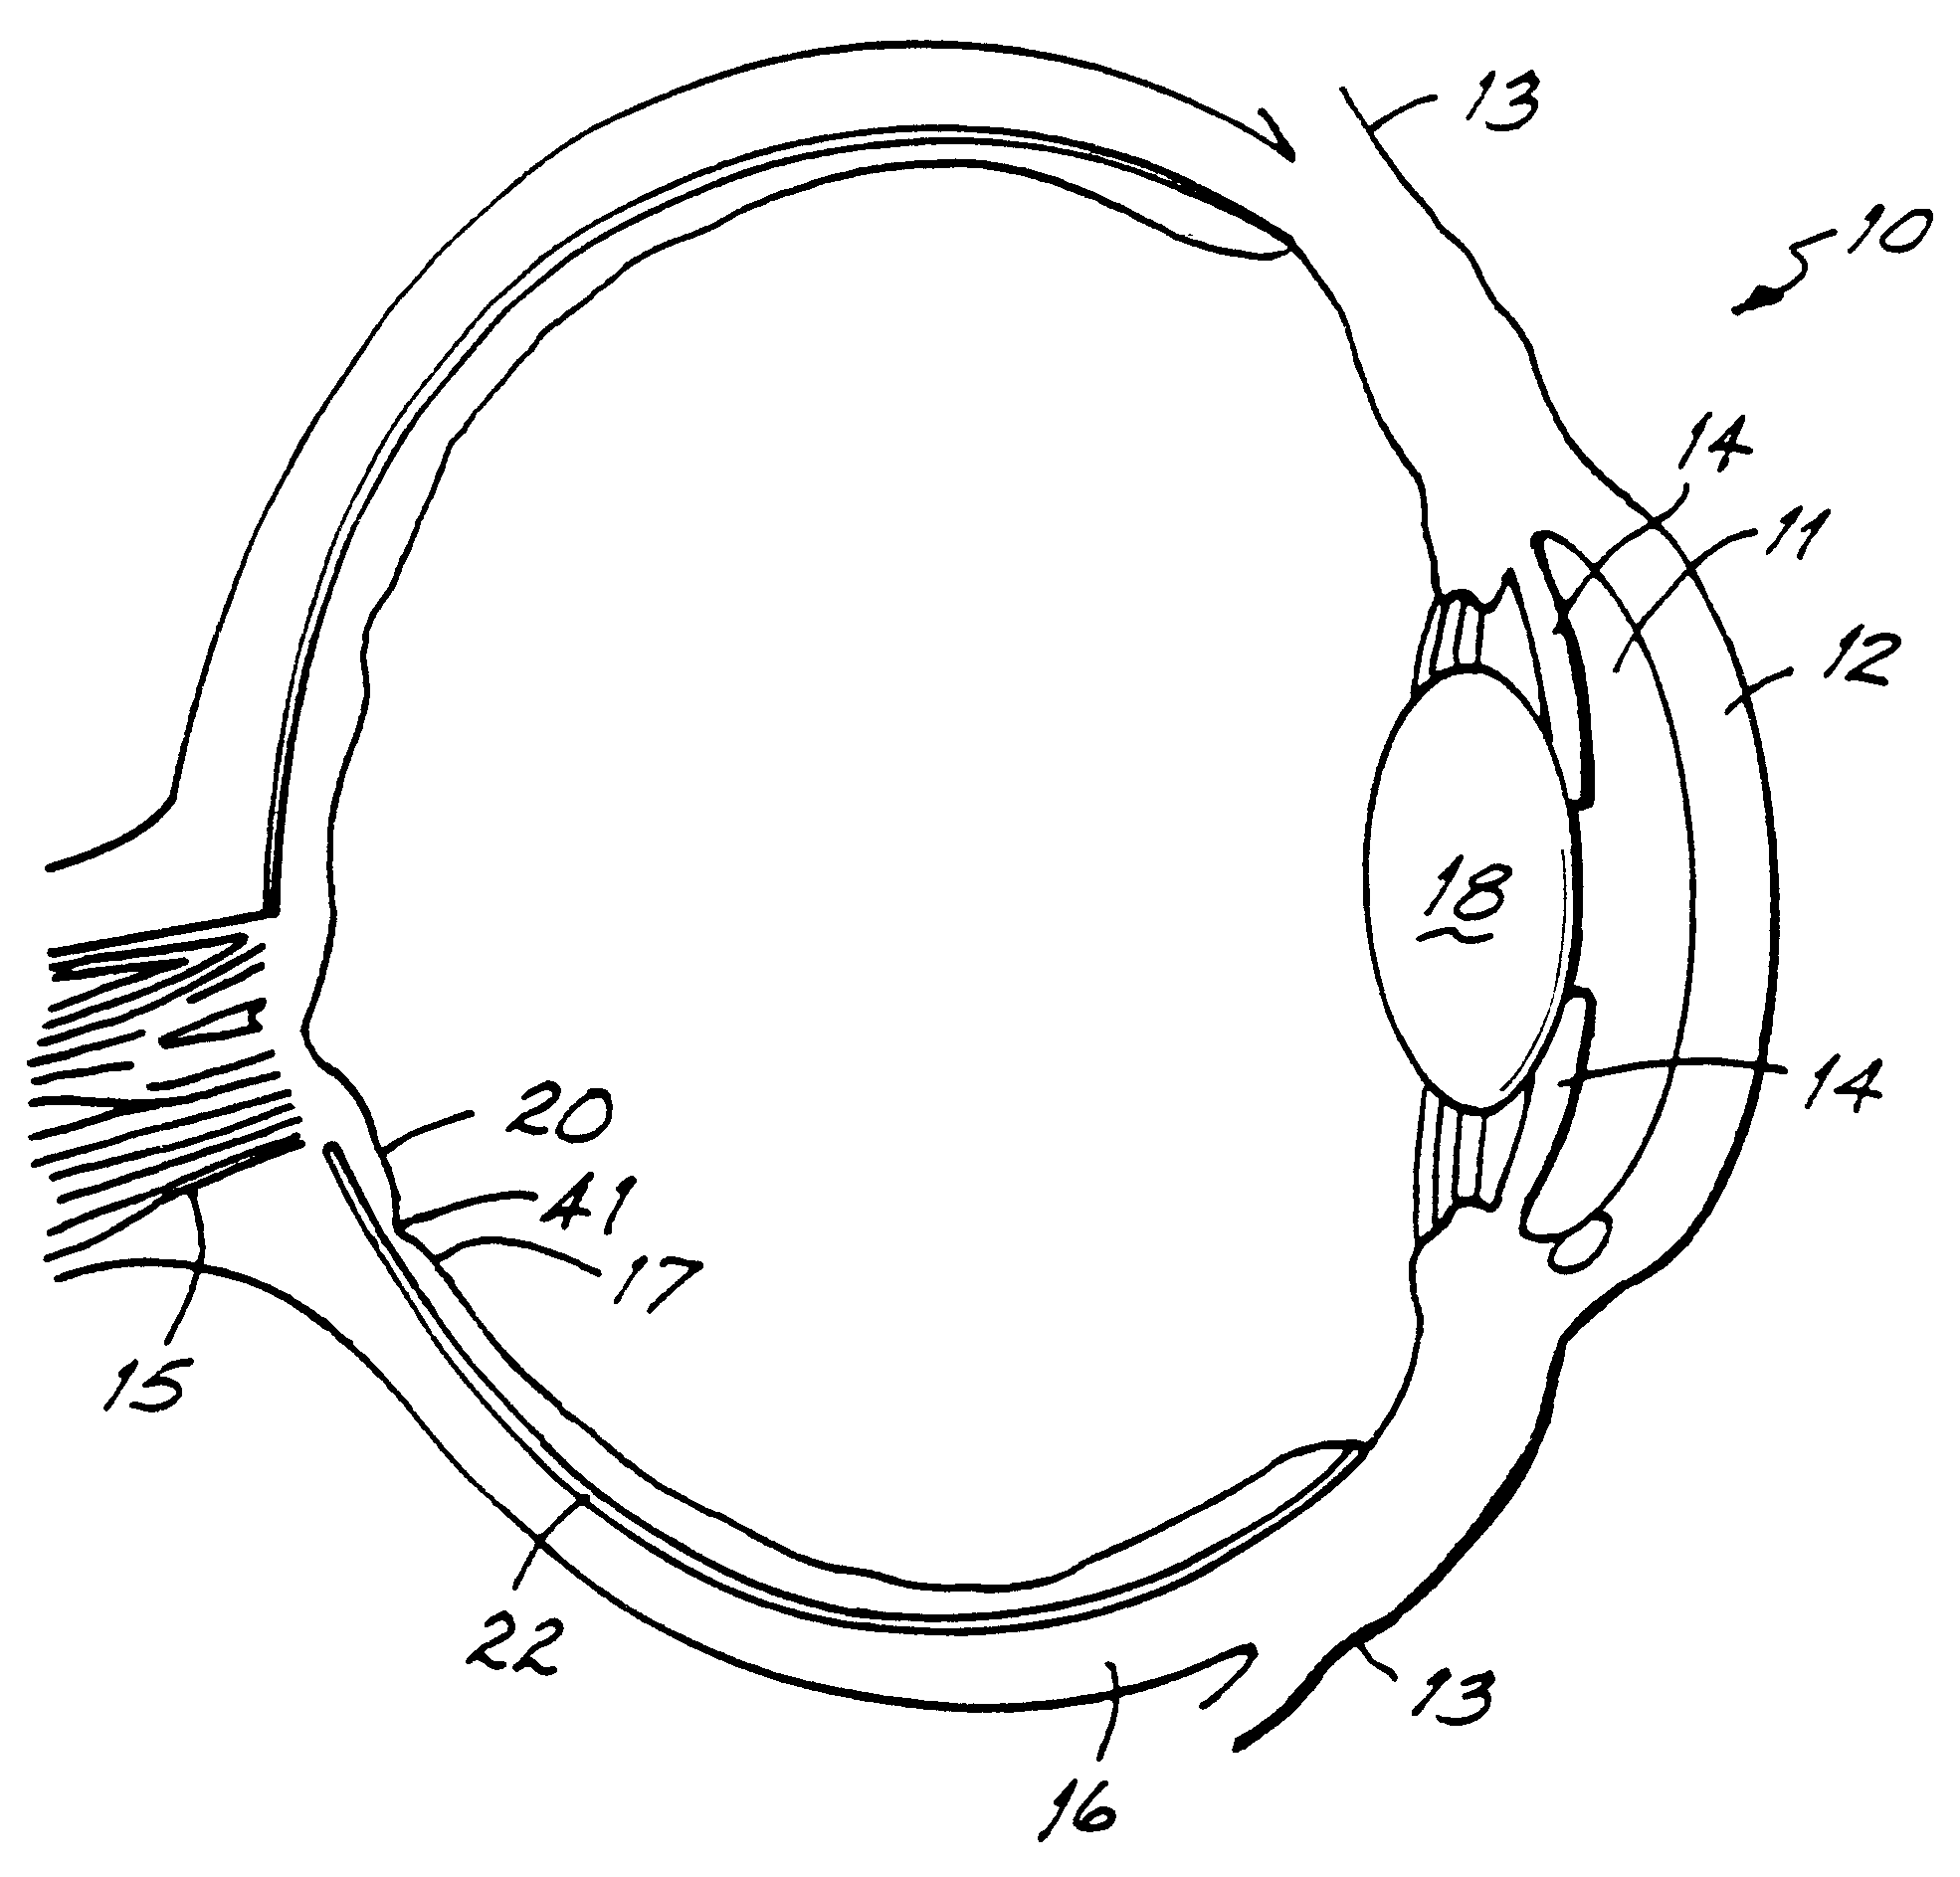 Method of ocular treatment